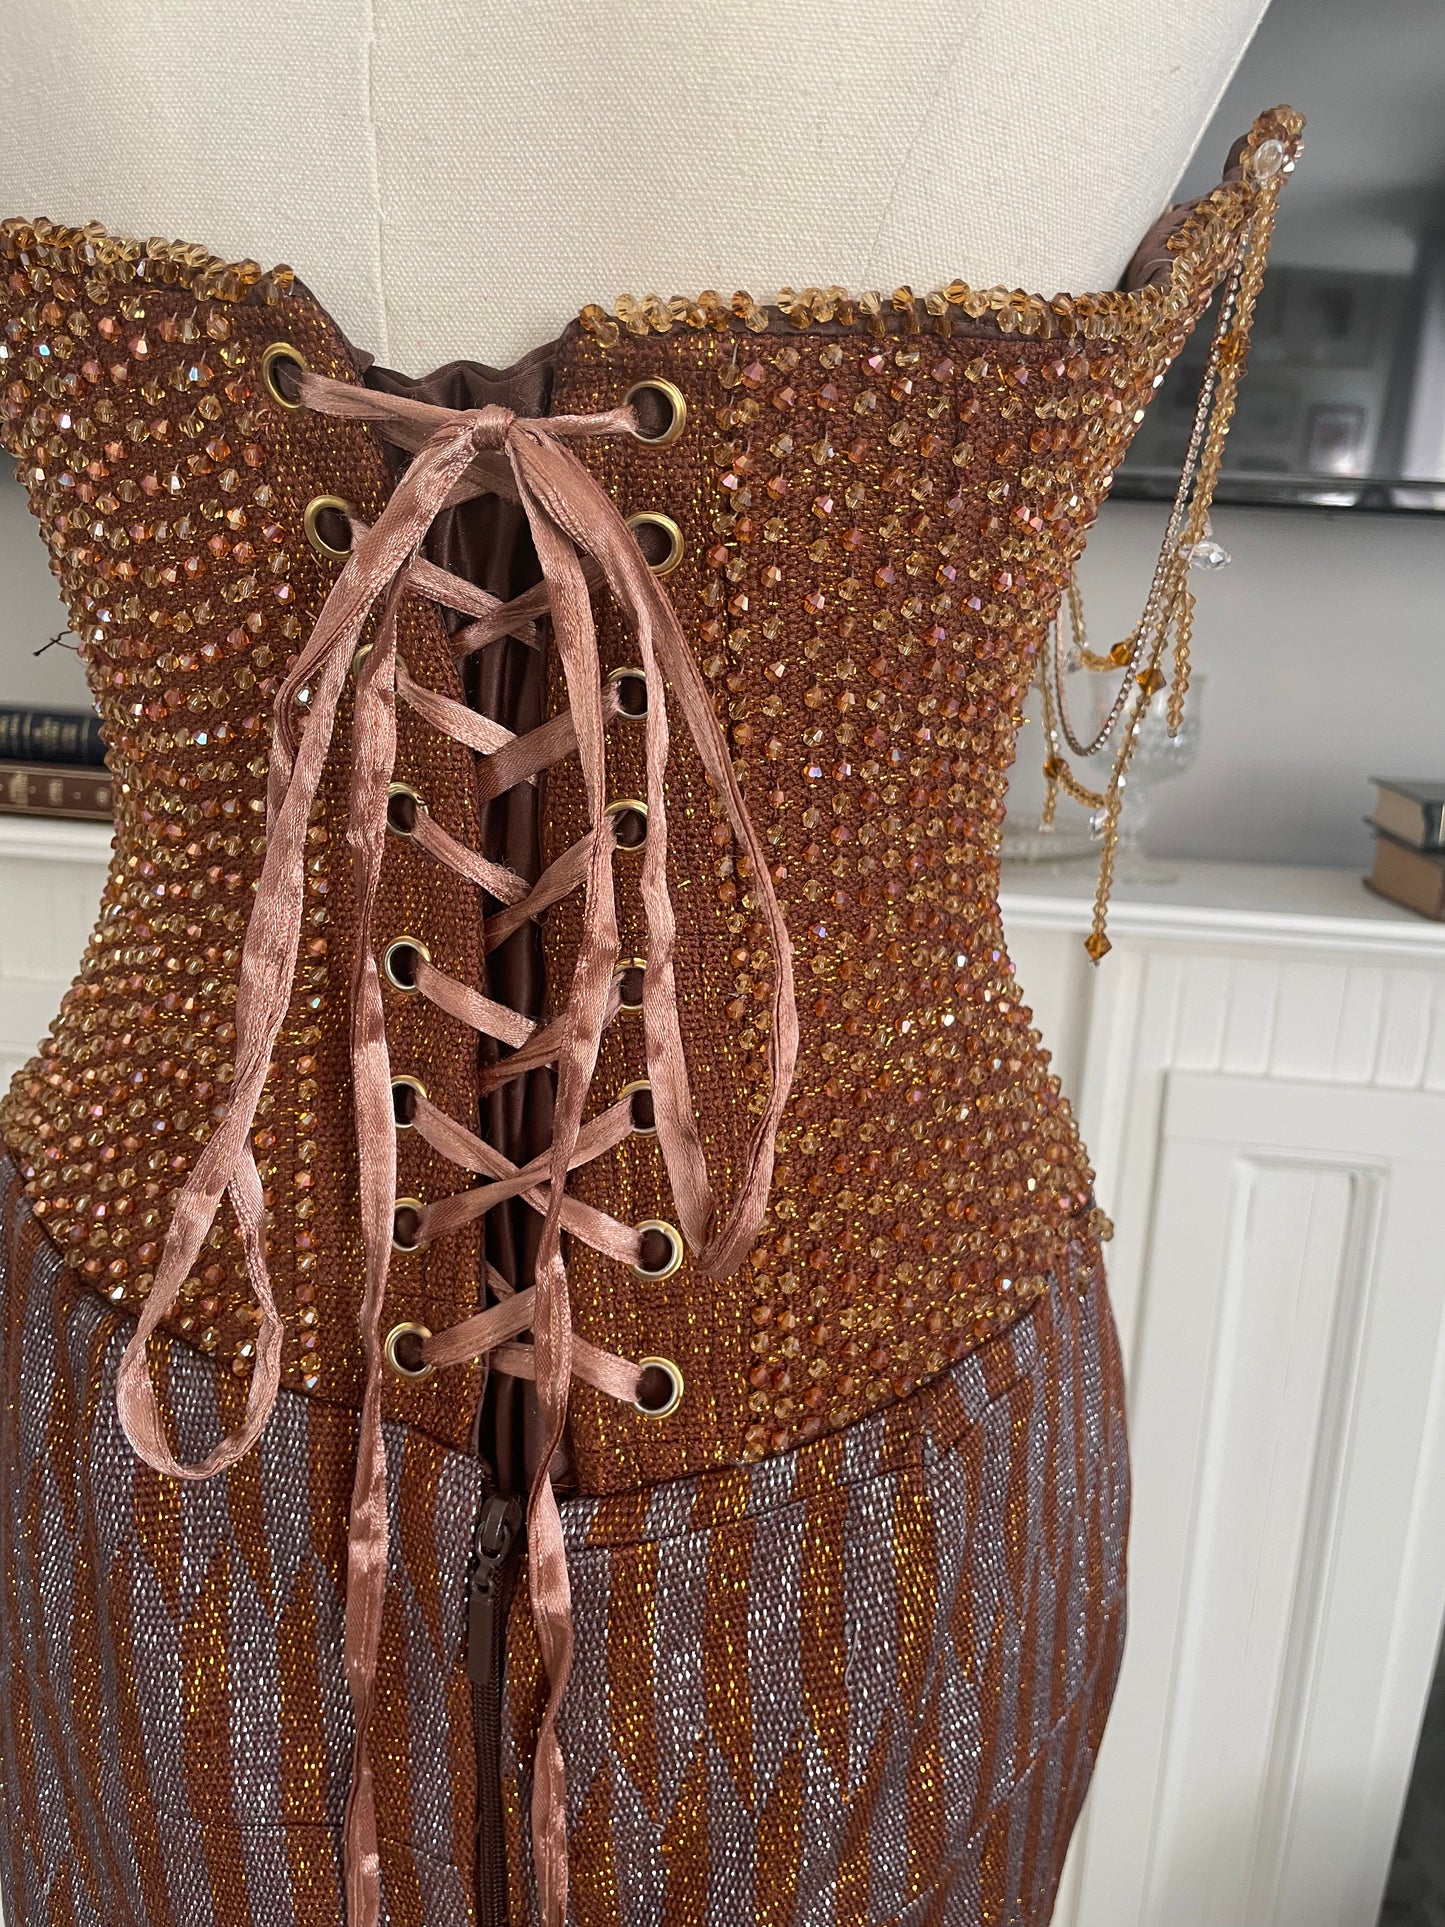 The Core Drape Dress by Shona Joy